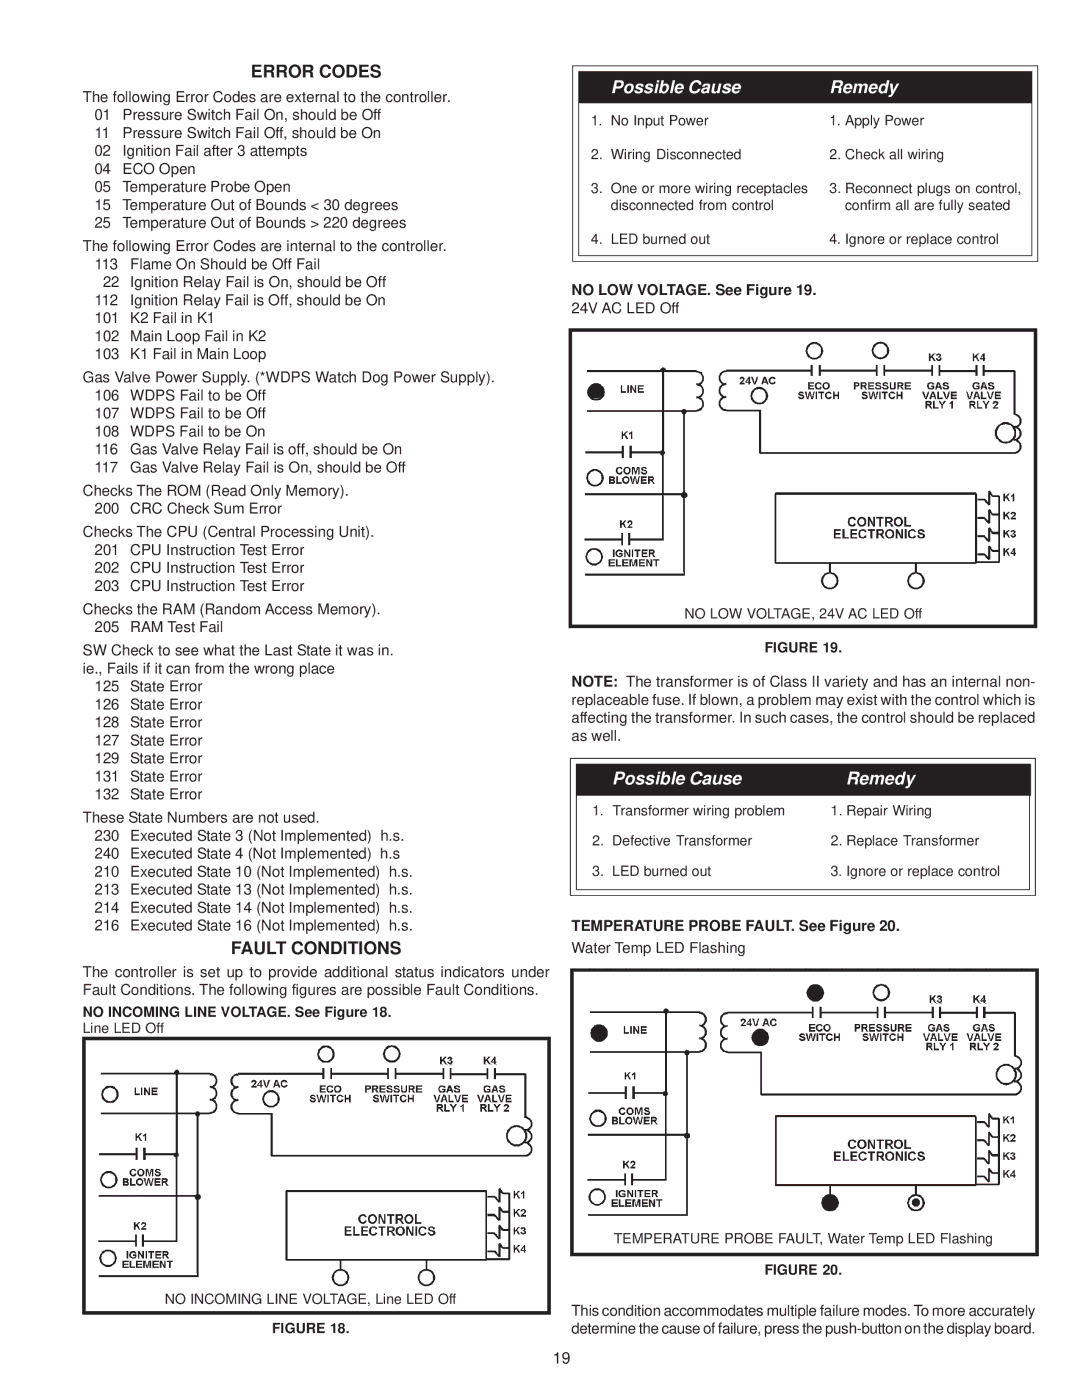 A.O. Smith BTH 300A, BTH 400A warranty Error Codes, Fault Conditions 